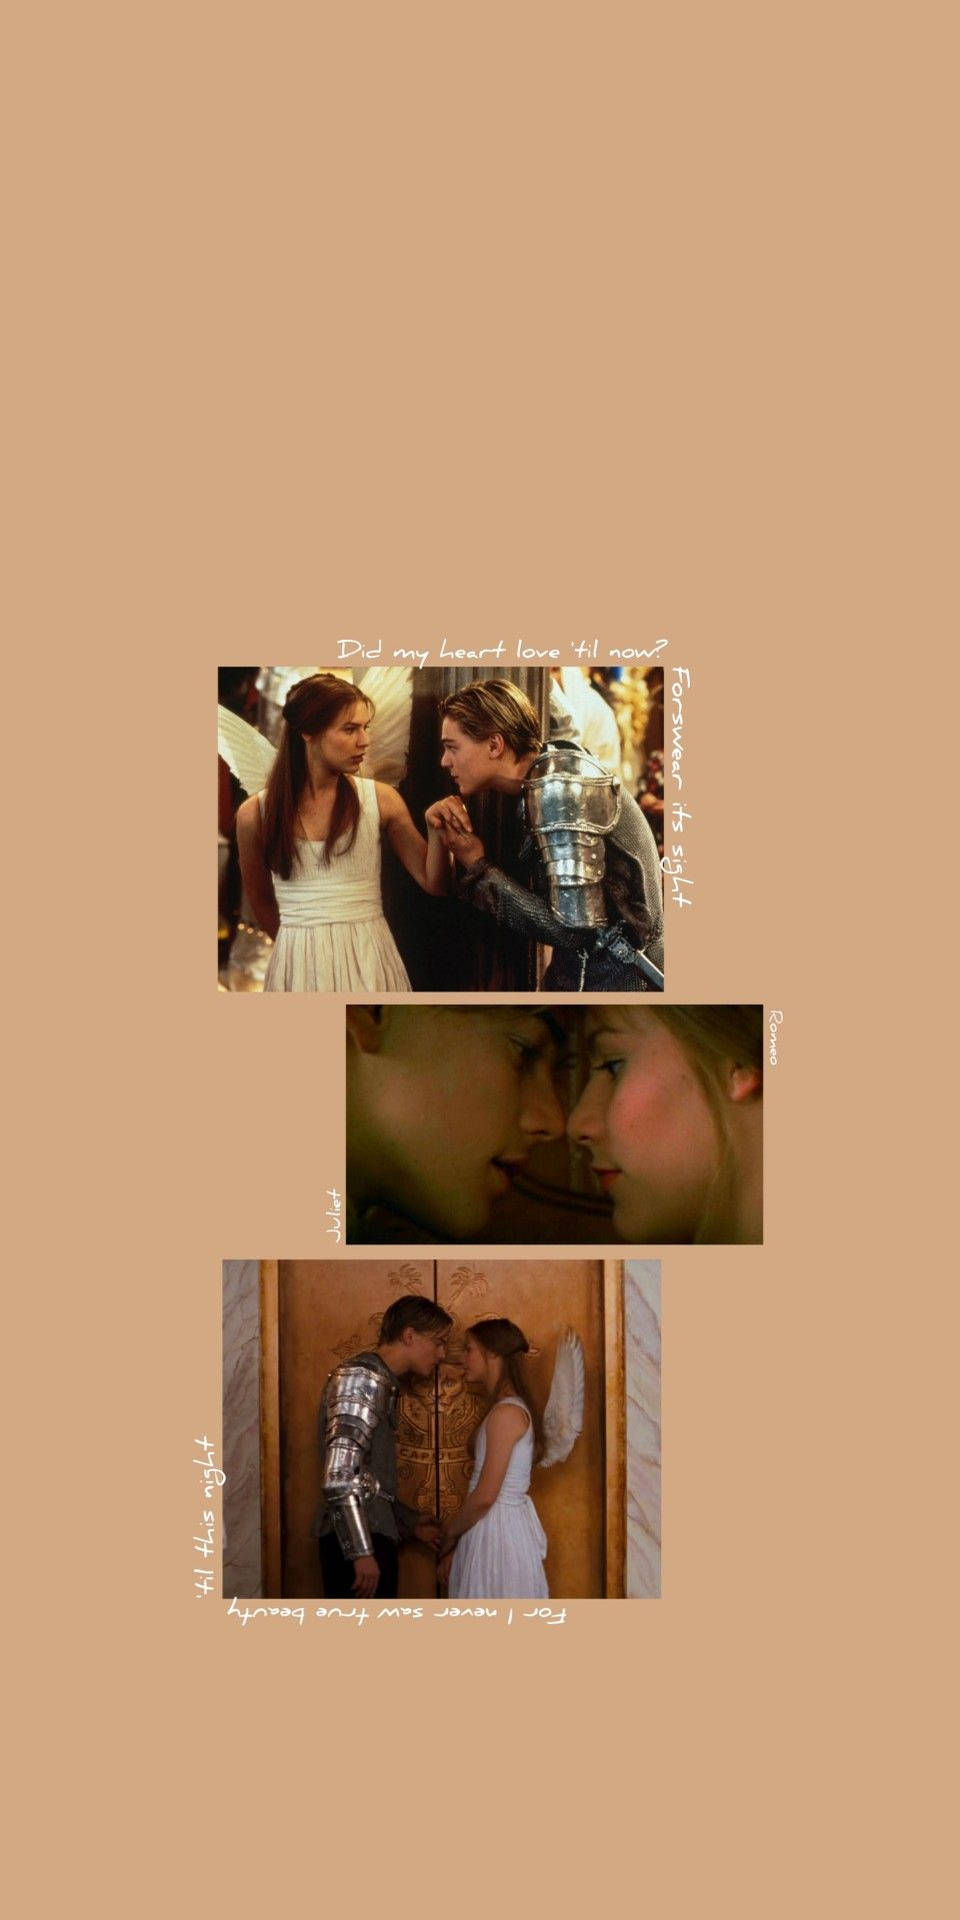 Romeo And Juliet Movie Scenes Wallpaper